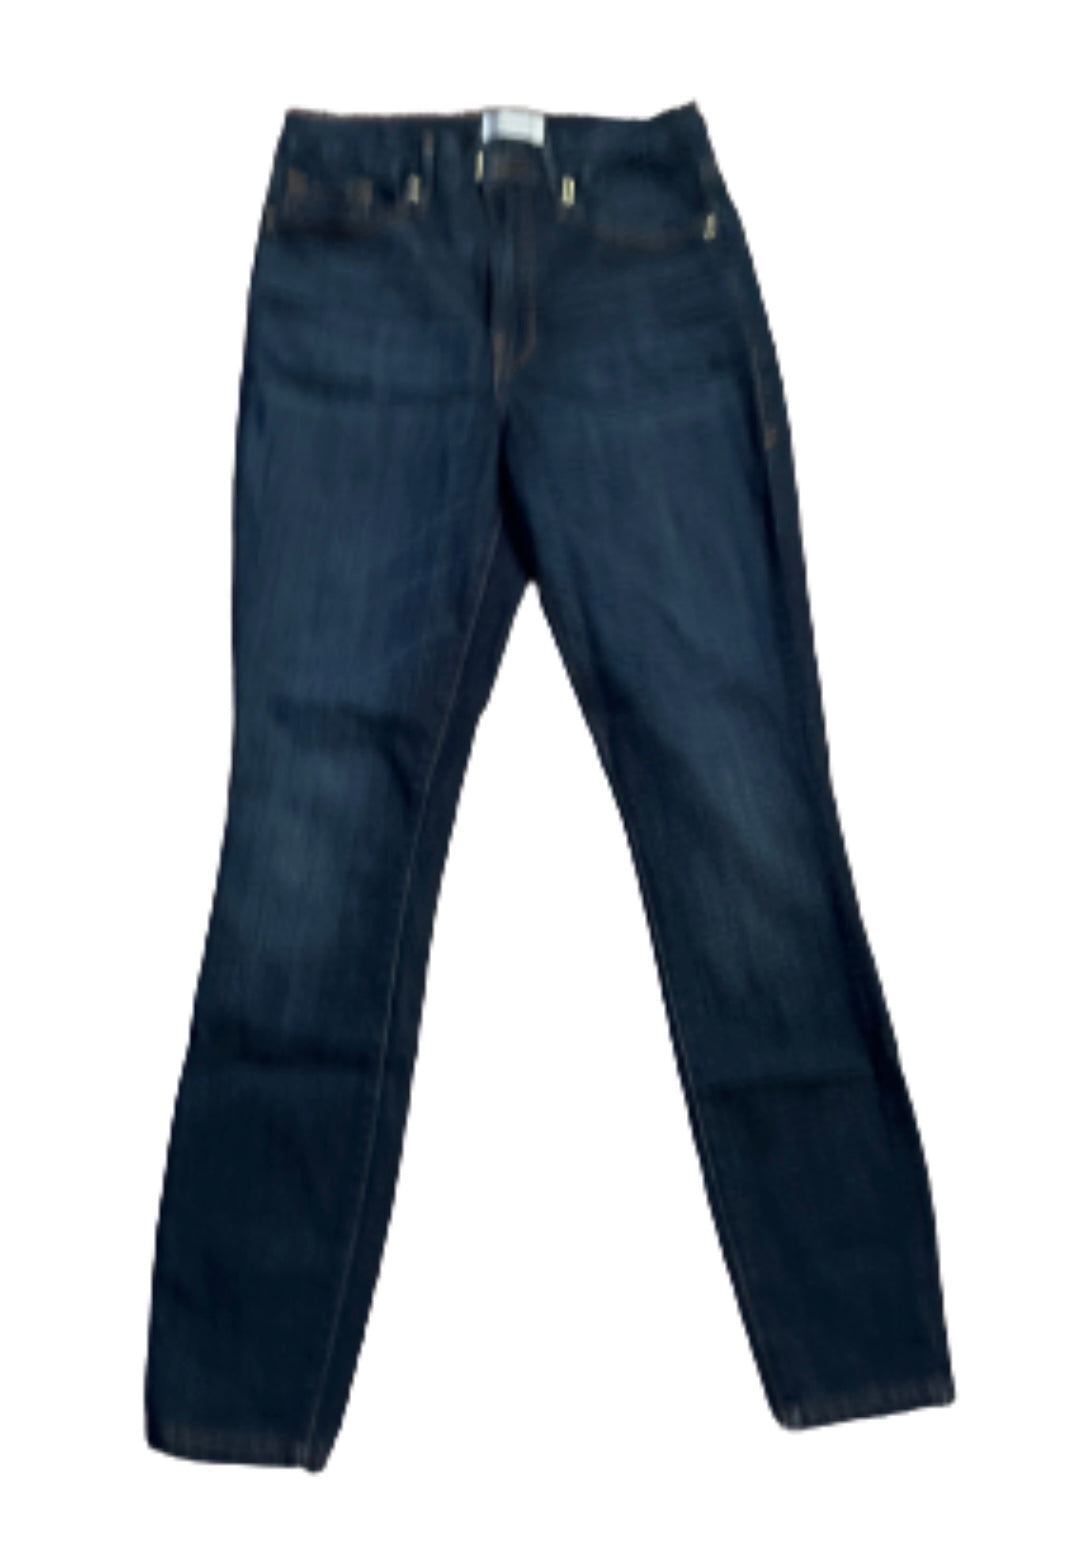 BONES: Dr Brennan's GOOD AMERICAN Denim Jeans (28)